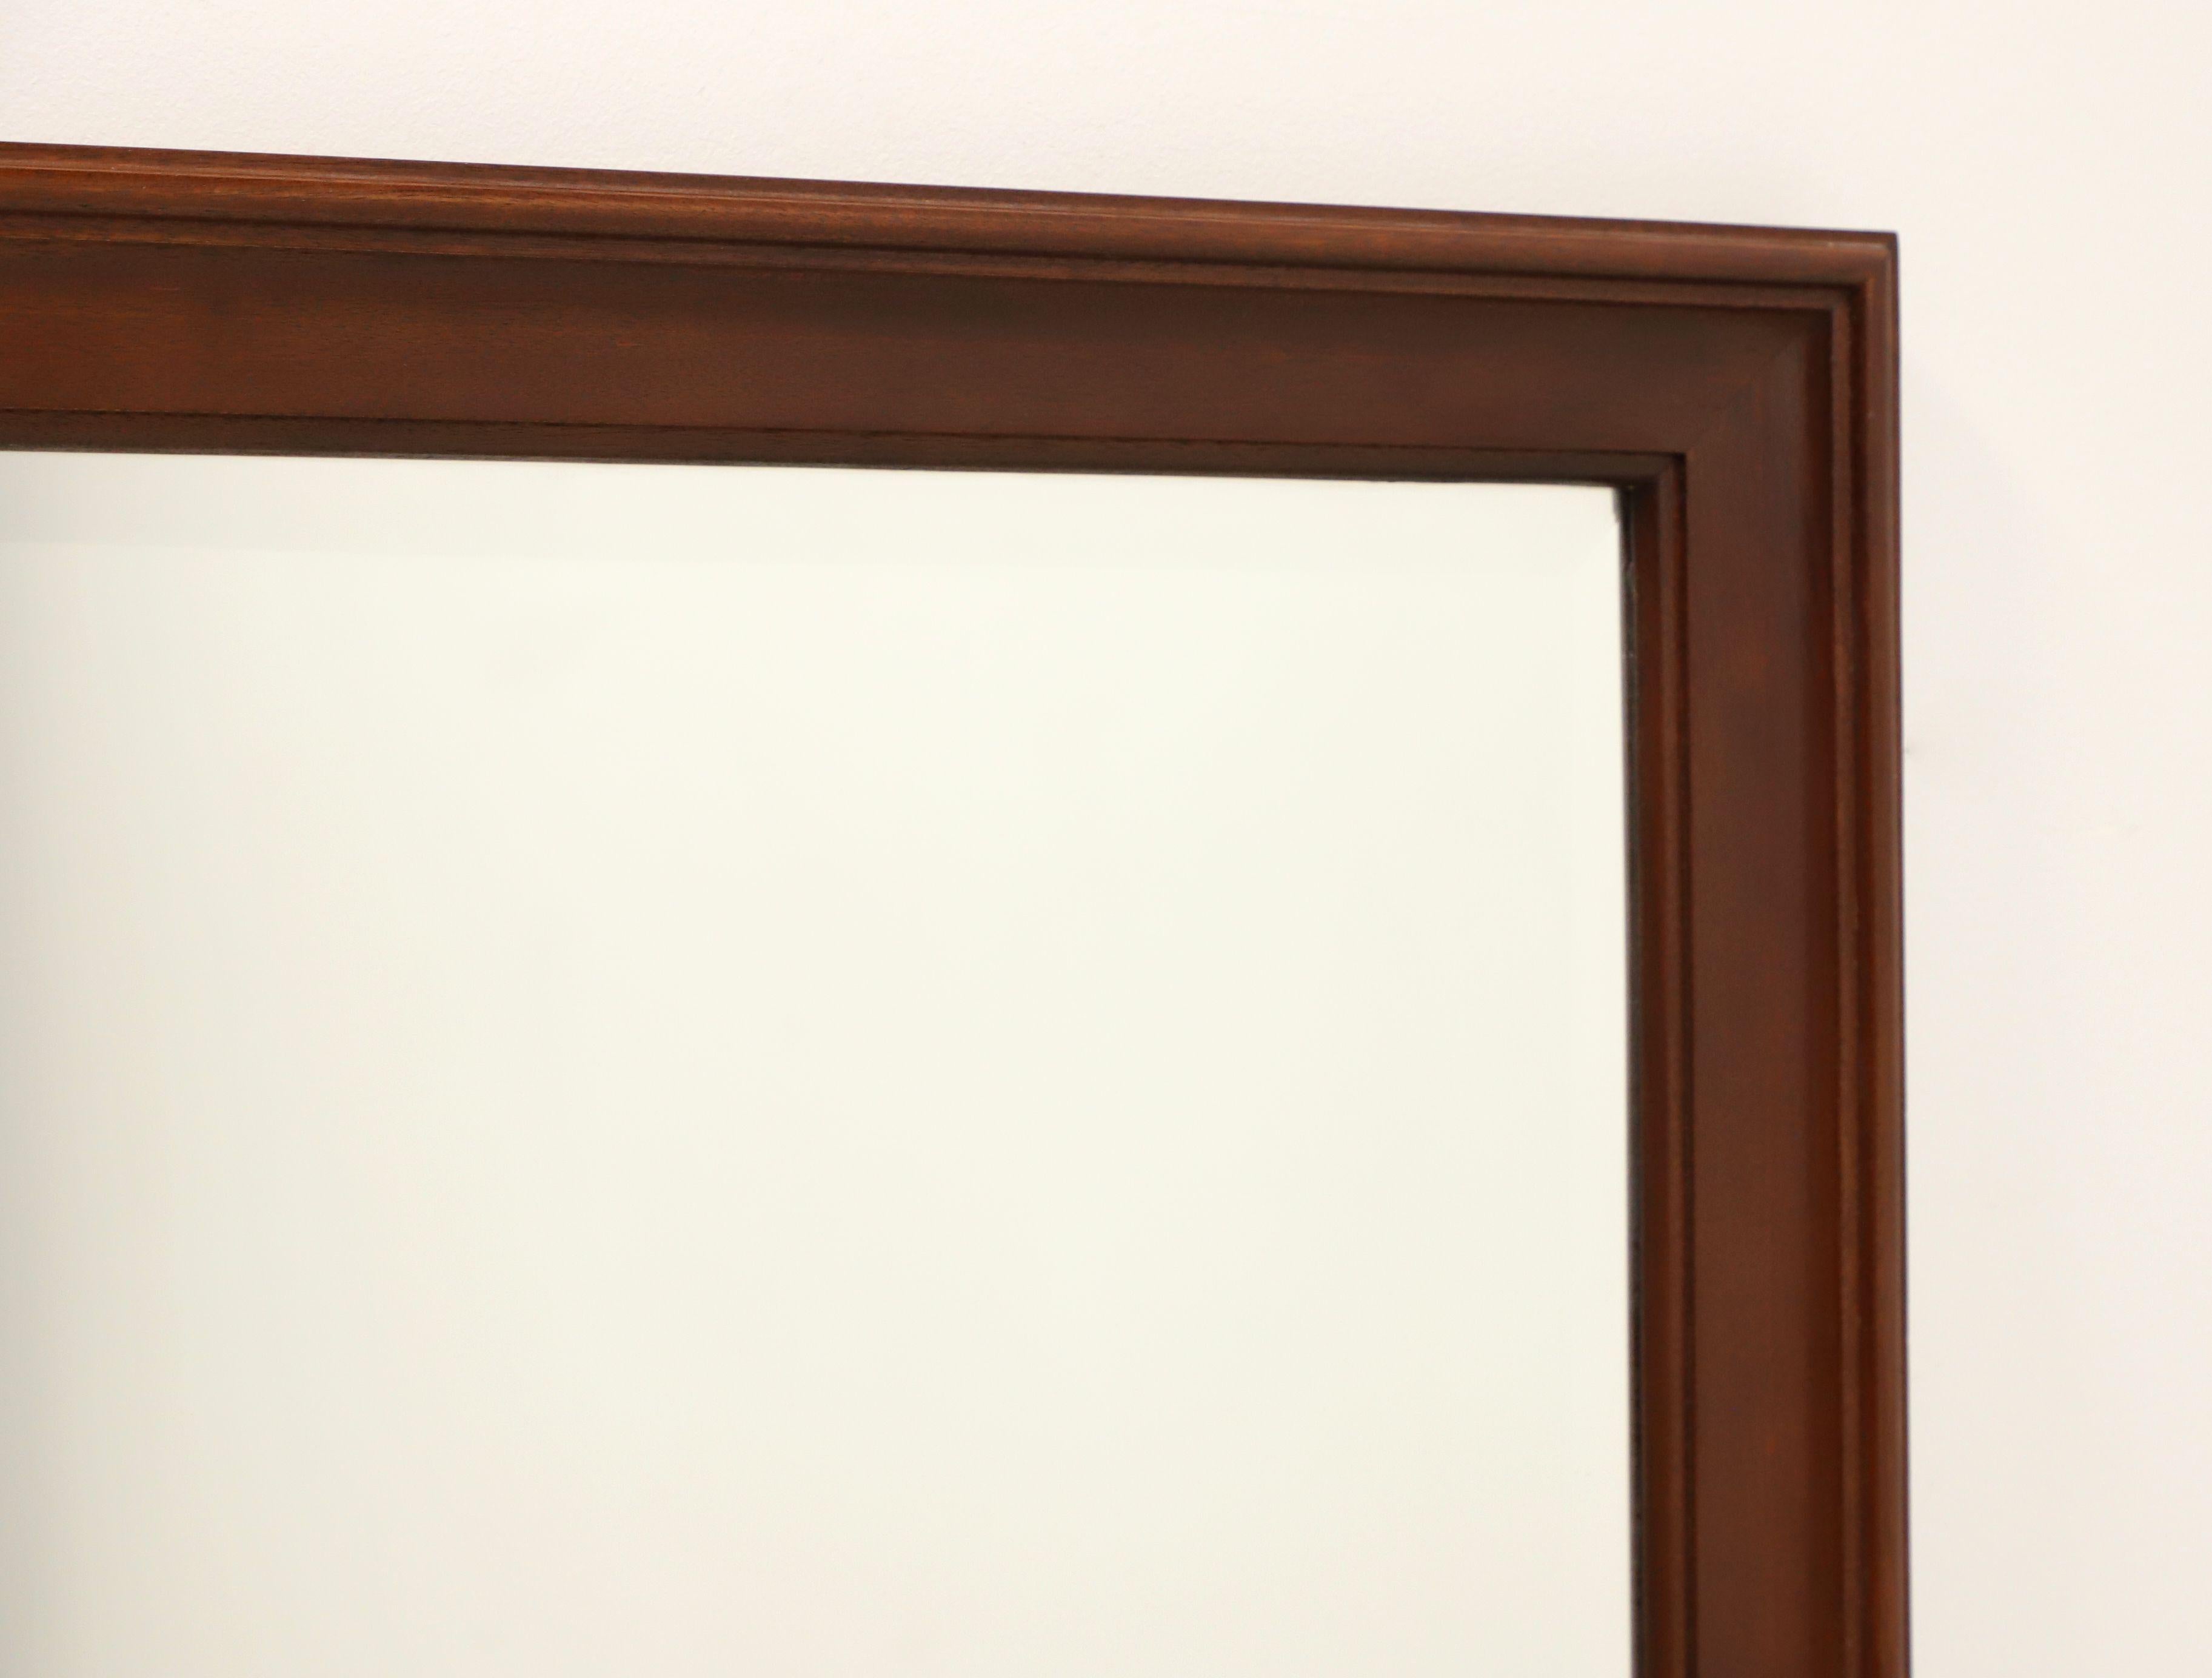 Other CRAFTIQUE Mellowax Solid Mahogany Rectangular Beveled Dresser / Wall Mirror